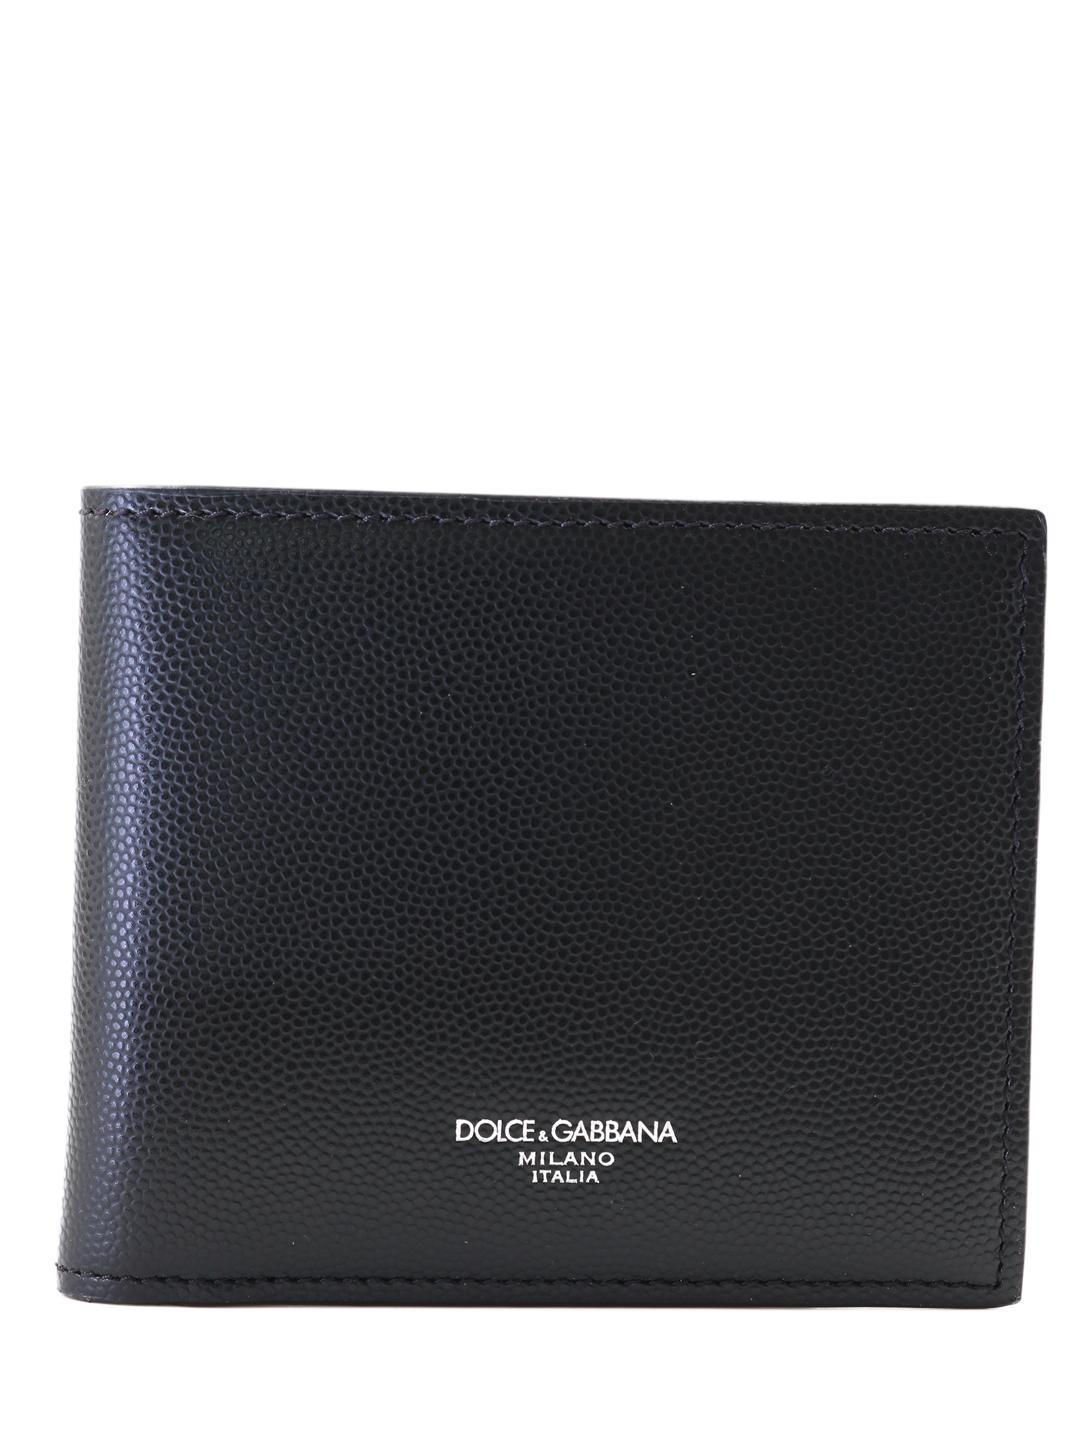 Dolce & Gabbana Black Bifold Wallet in Black for Men - Lyst